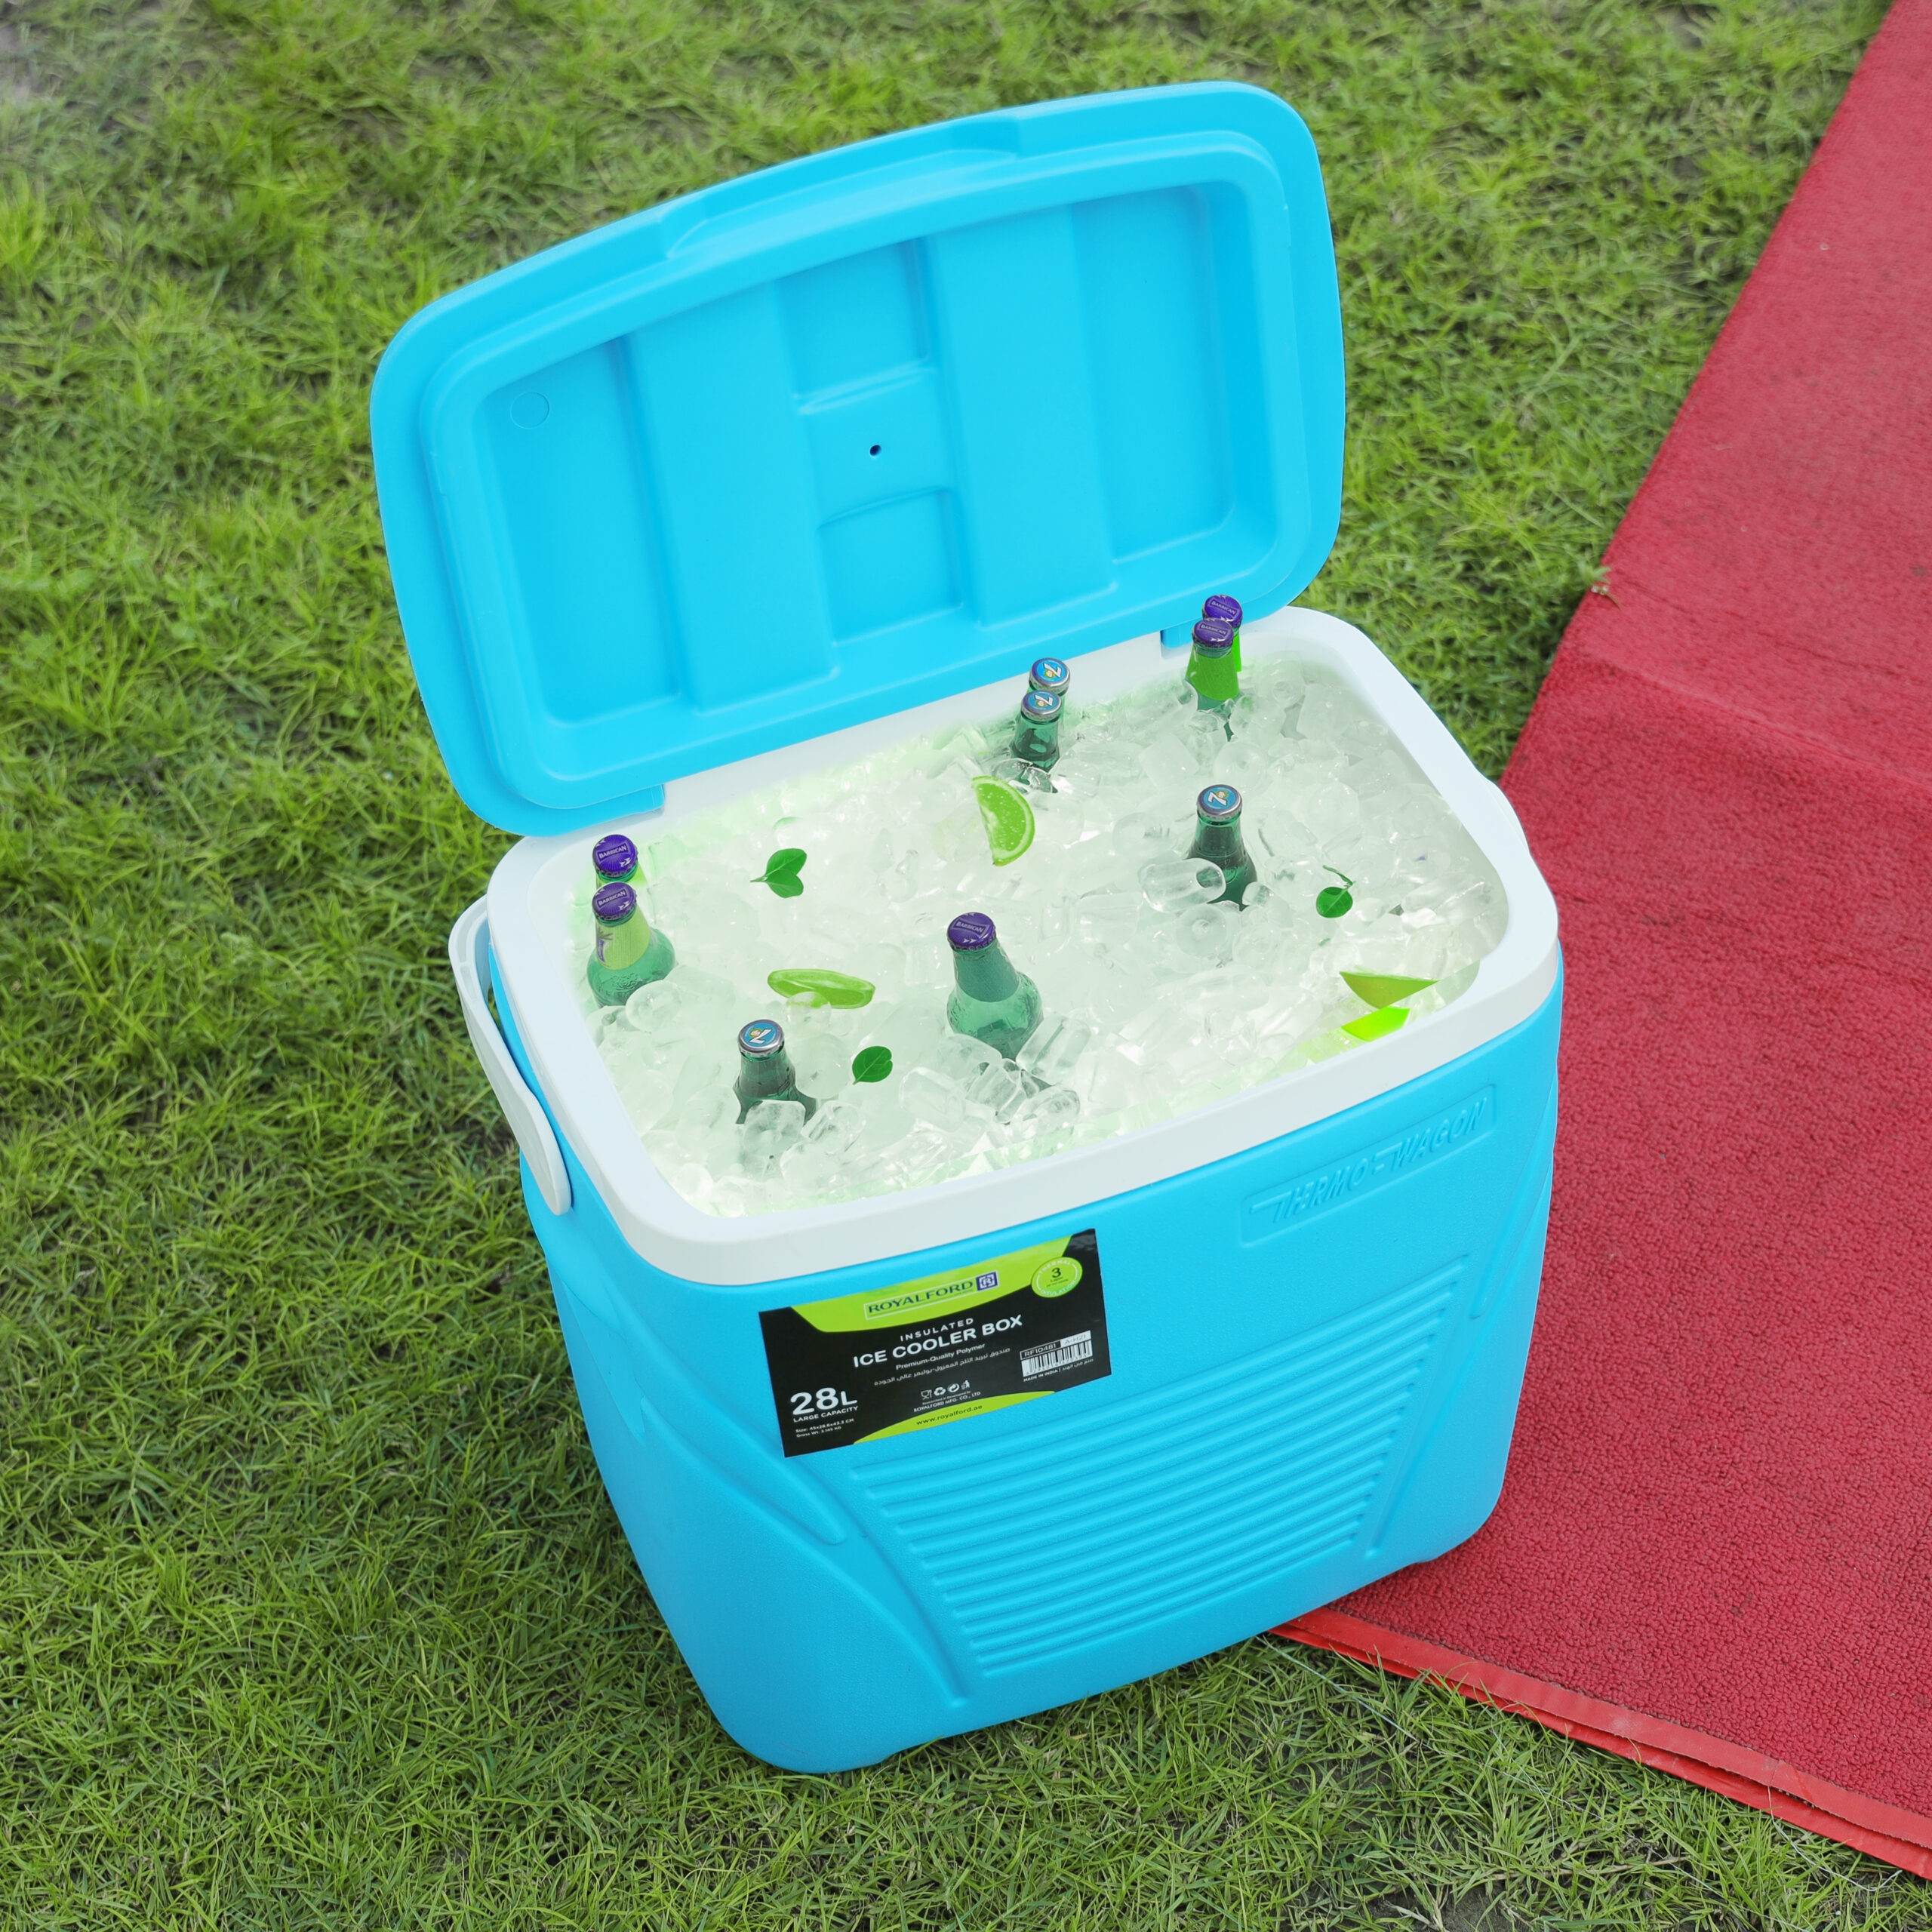 حافظة طعام 20 لتر - ازرق Royalford - Insulated Ice Cooler Box